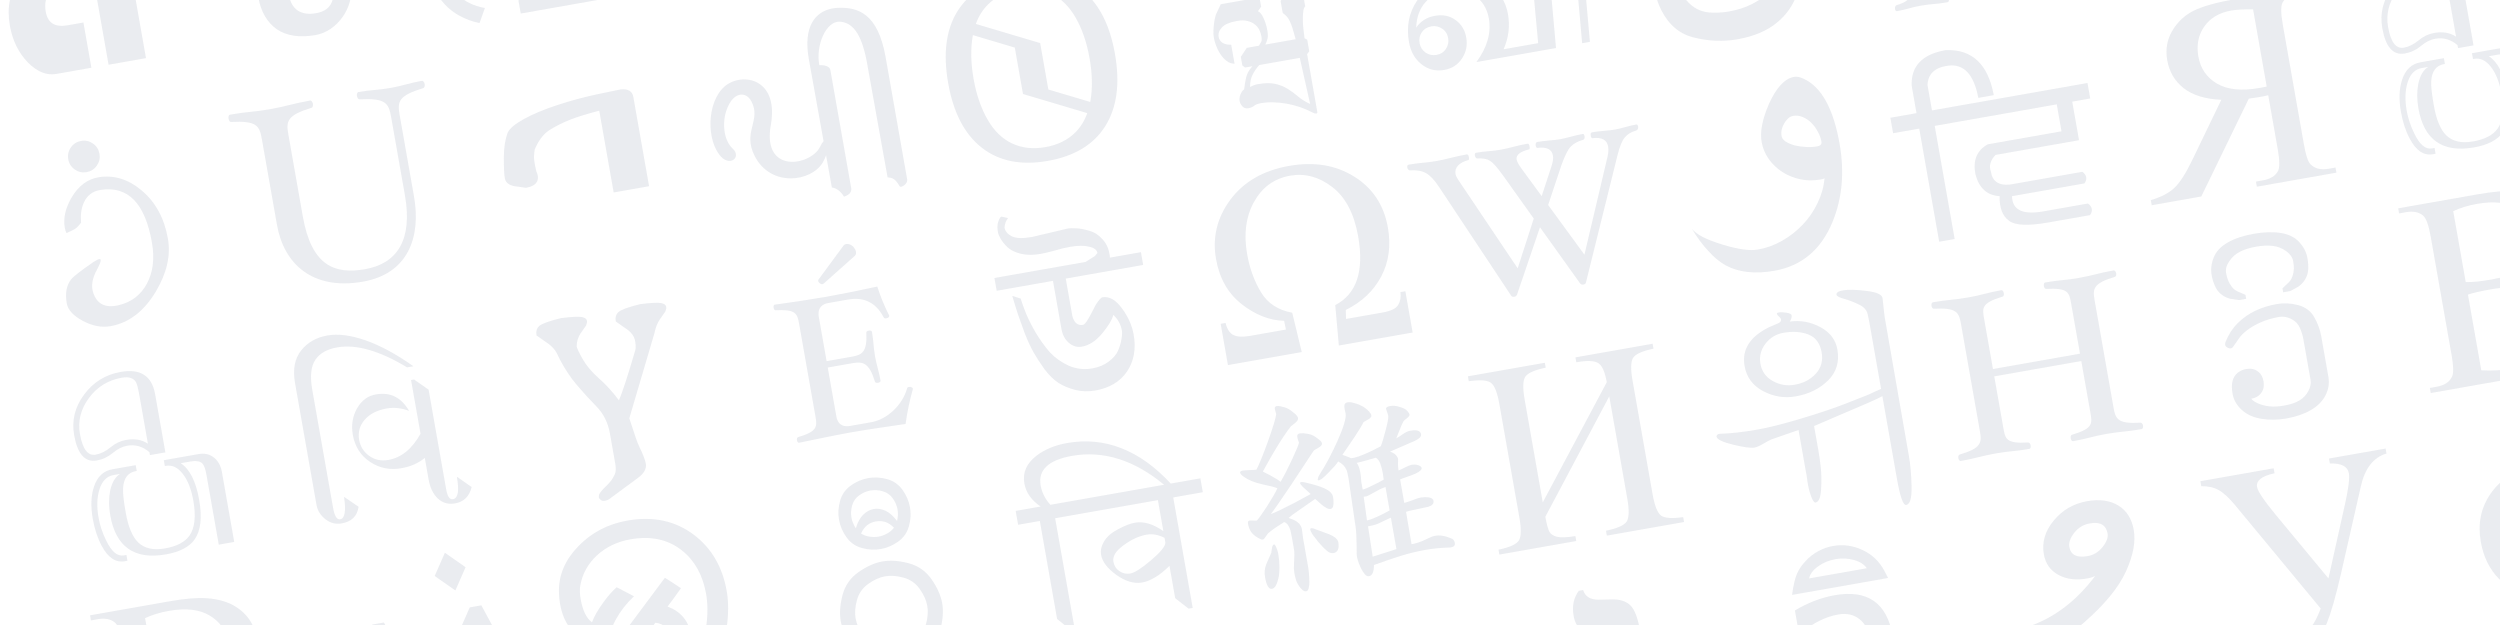 Wikipedia logo letters banner.svg